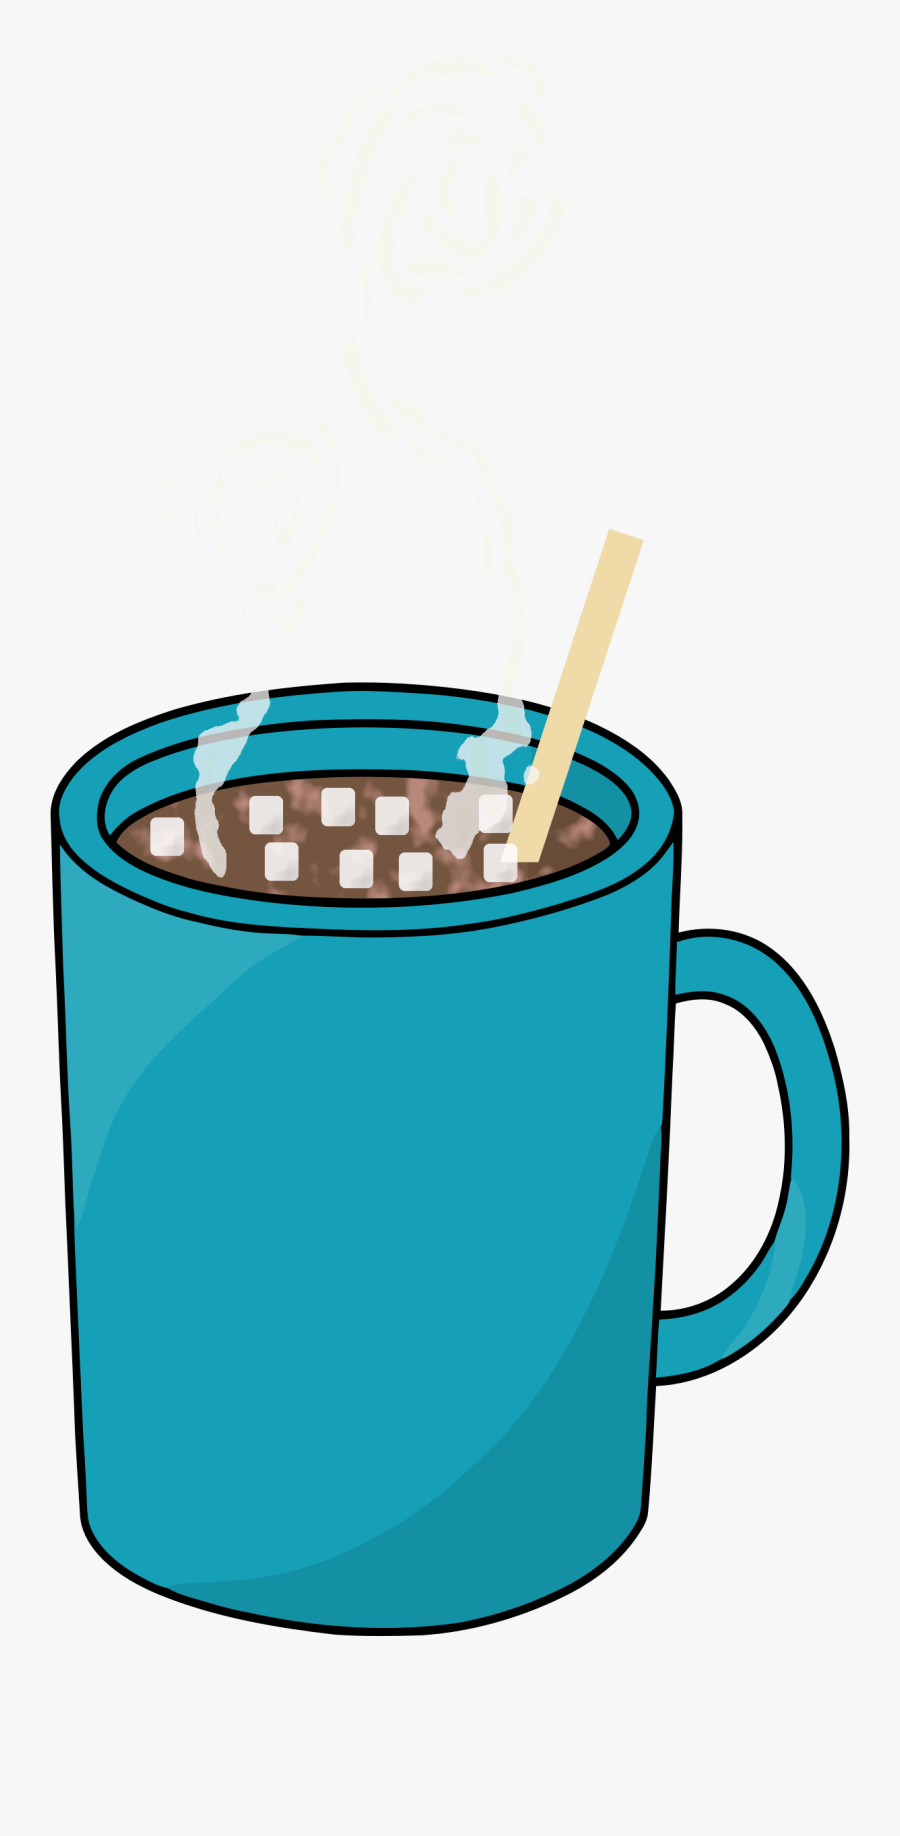 Hot Chocolate Cup Clip Art, Transparent Clipart